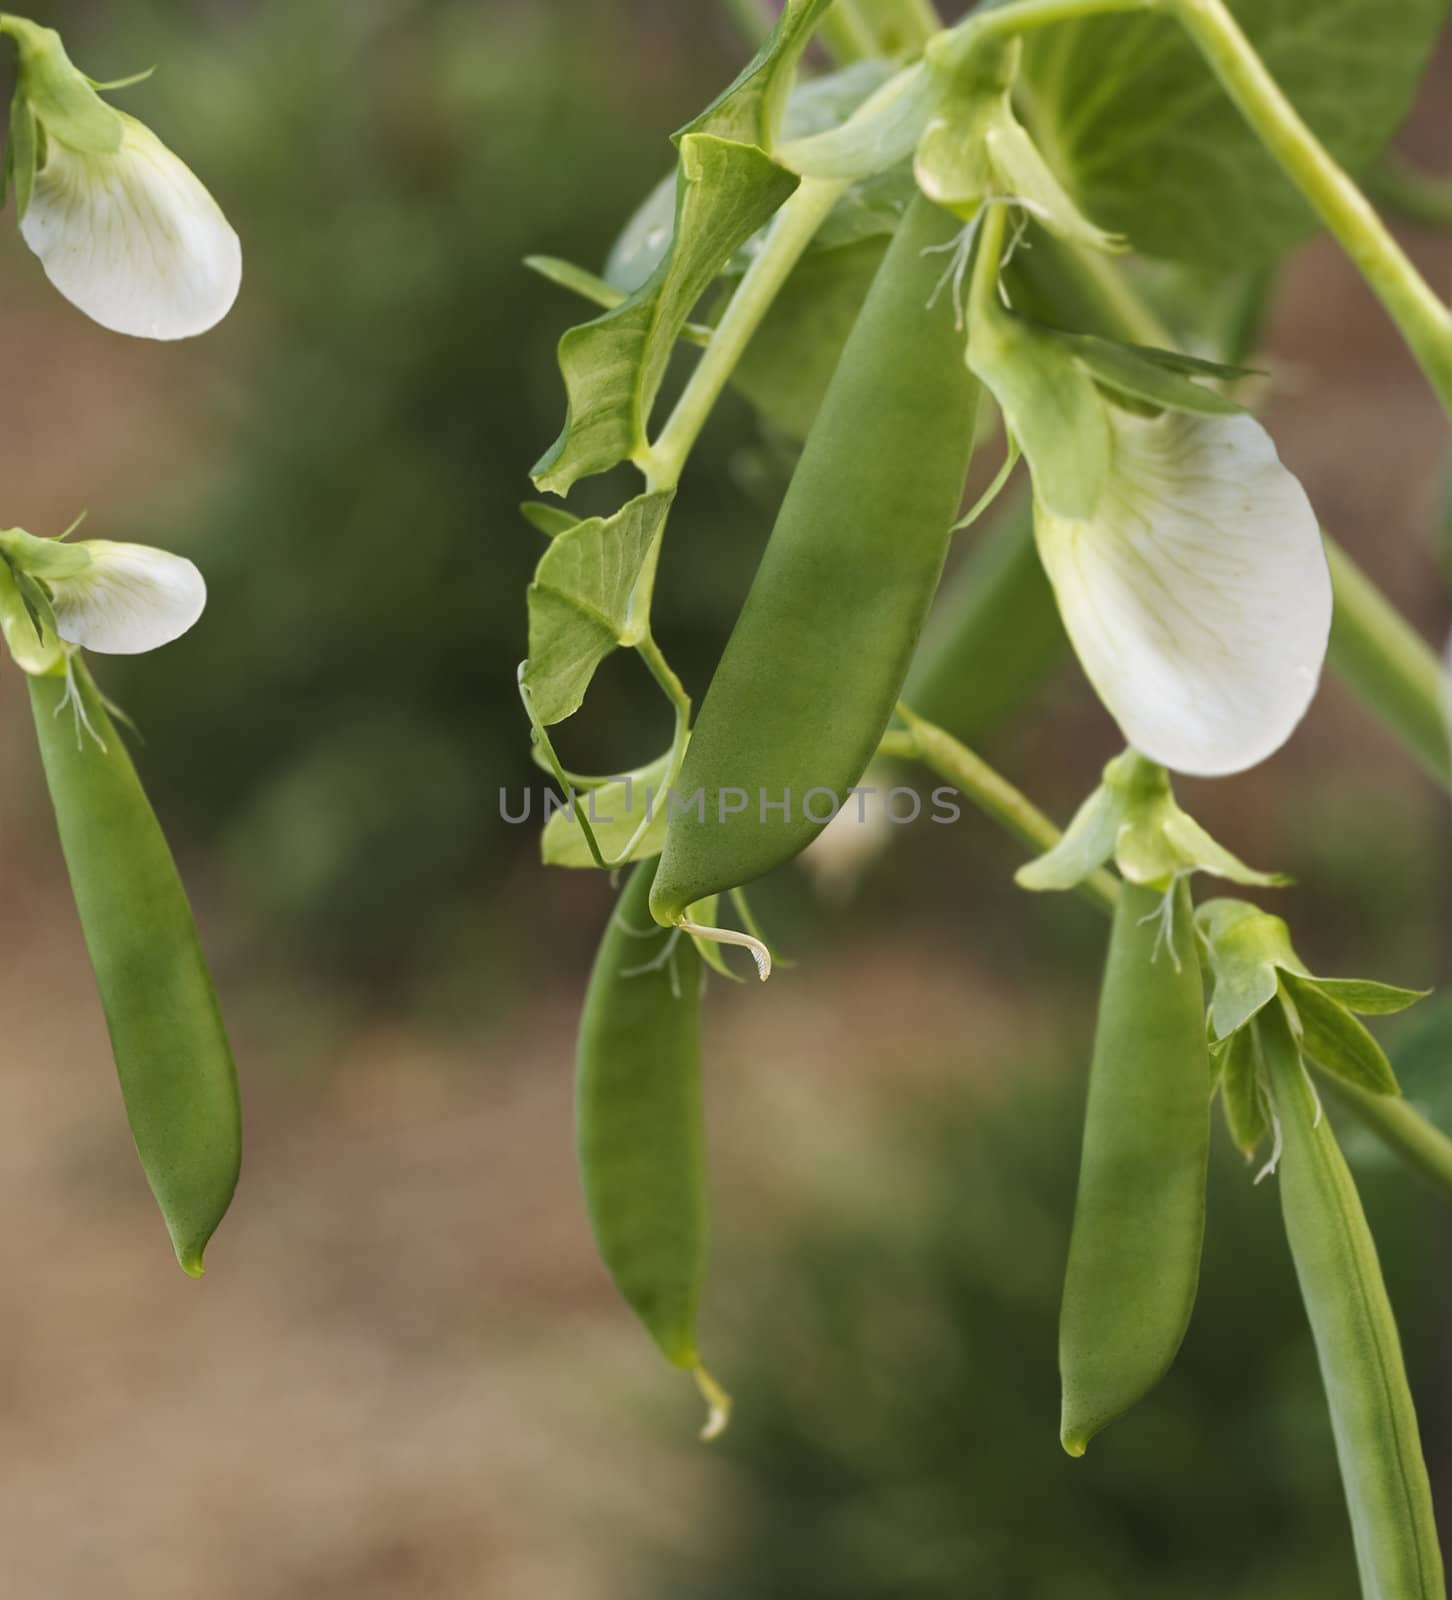 spring fresh garden pea pods - organic vegetables by sherj